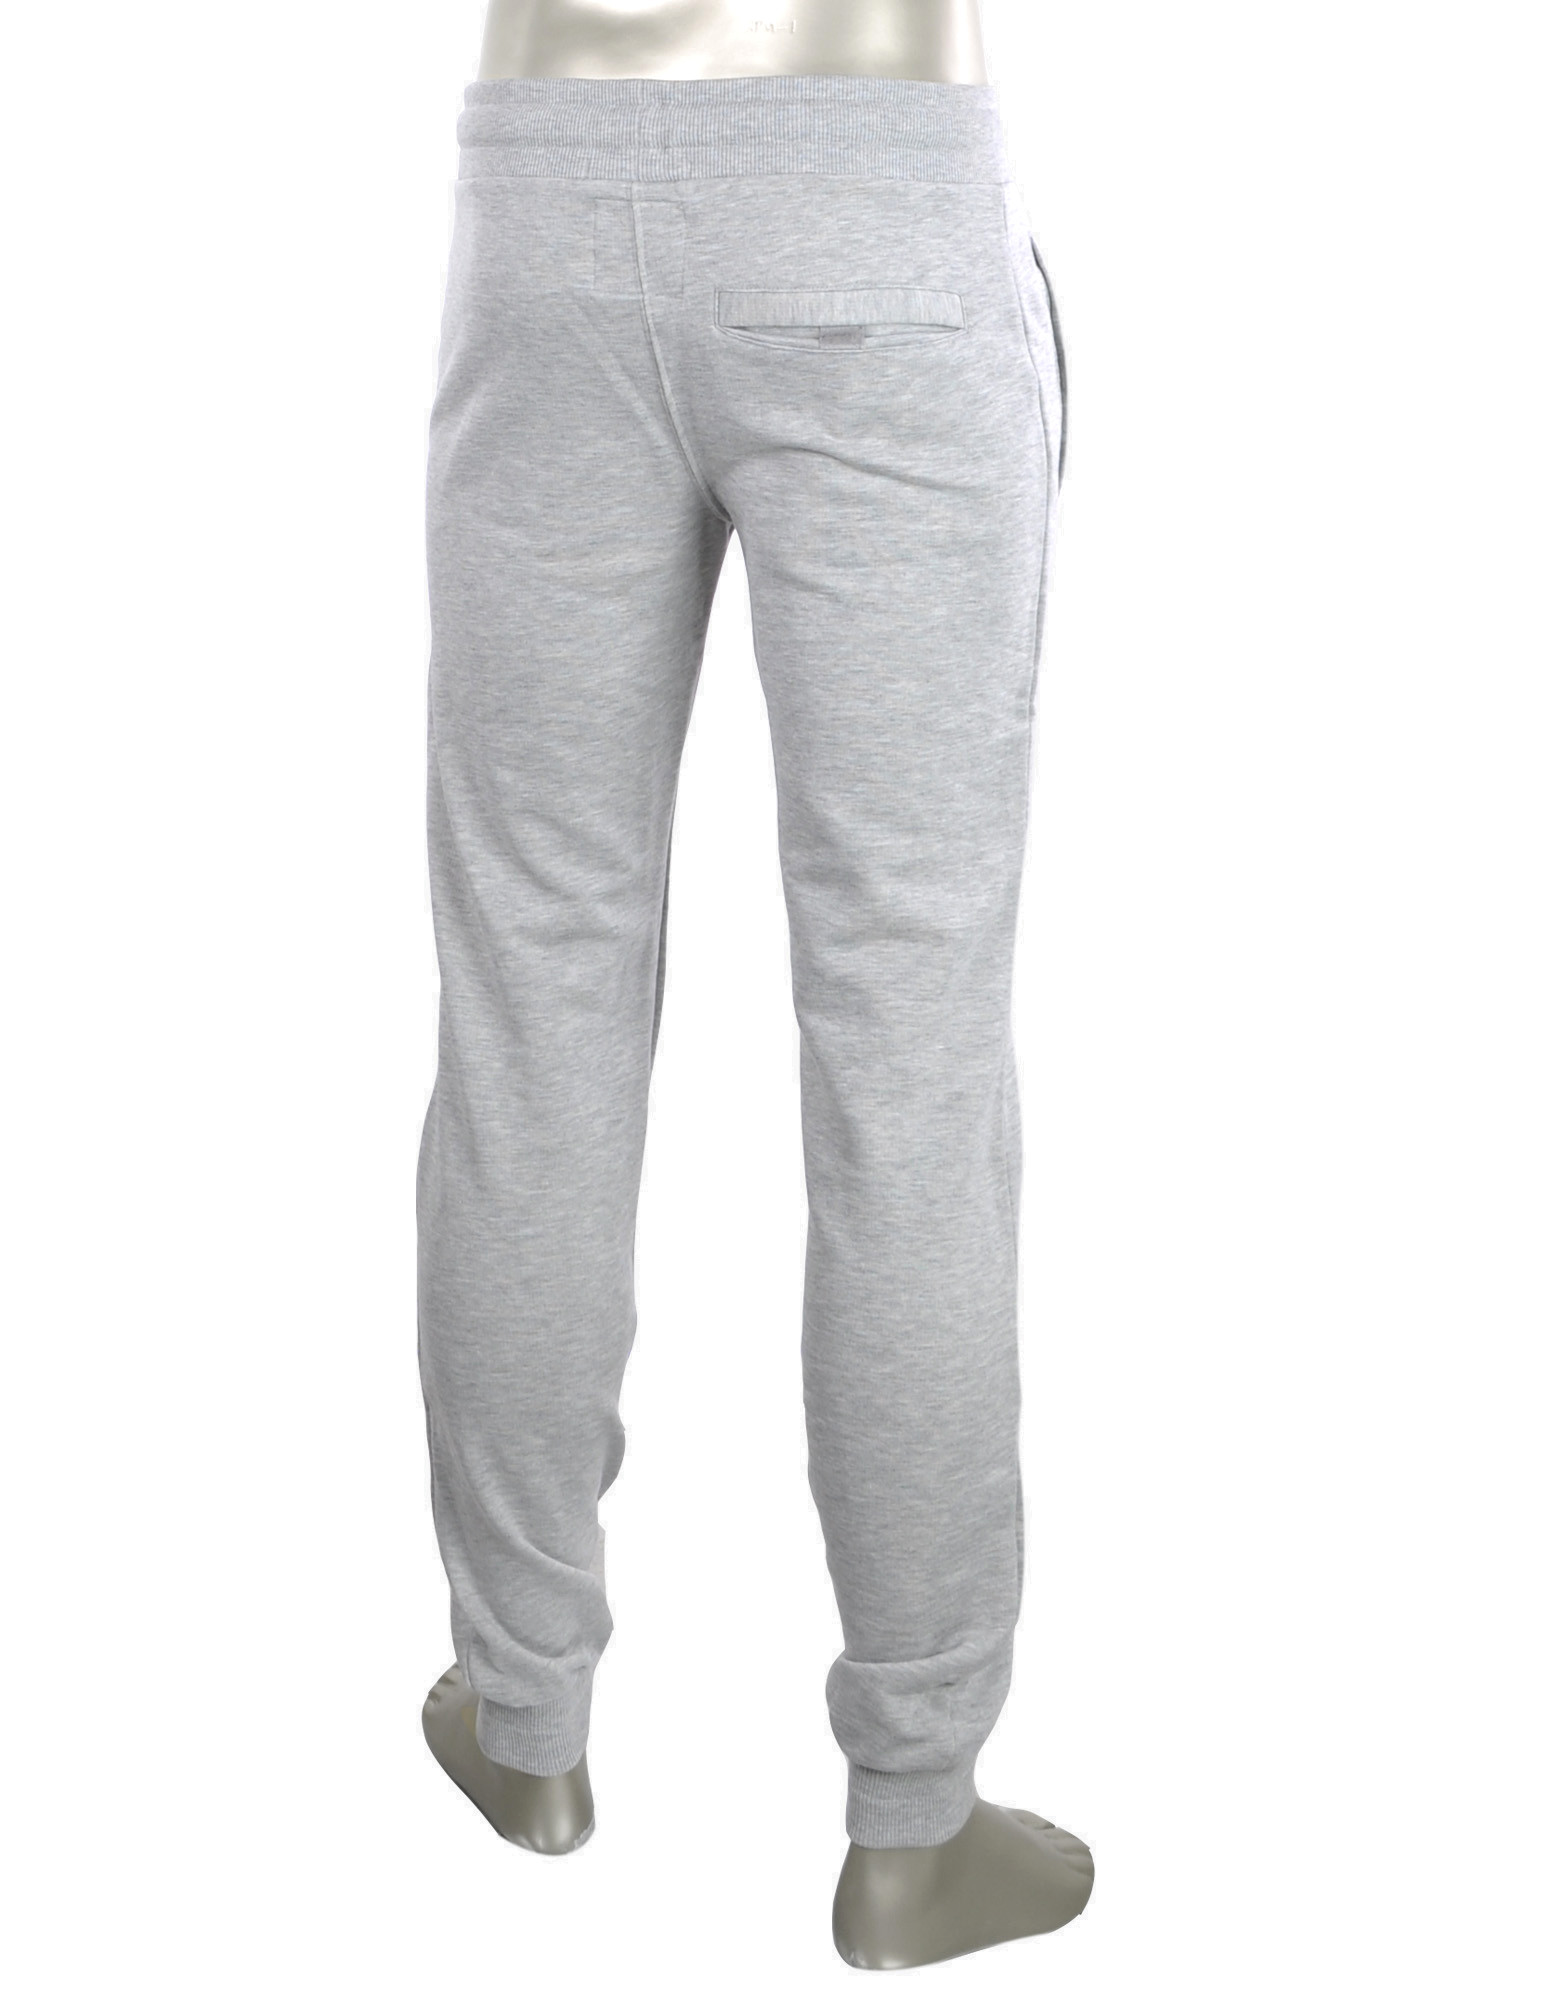 Pantalone Felpa by LEONE (colour: grey)